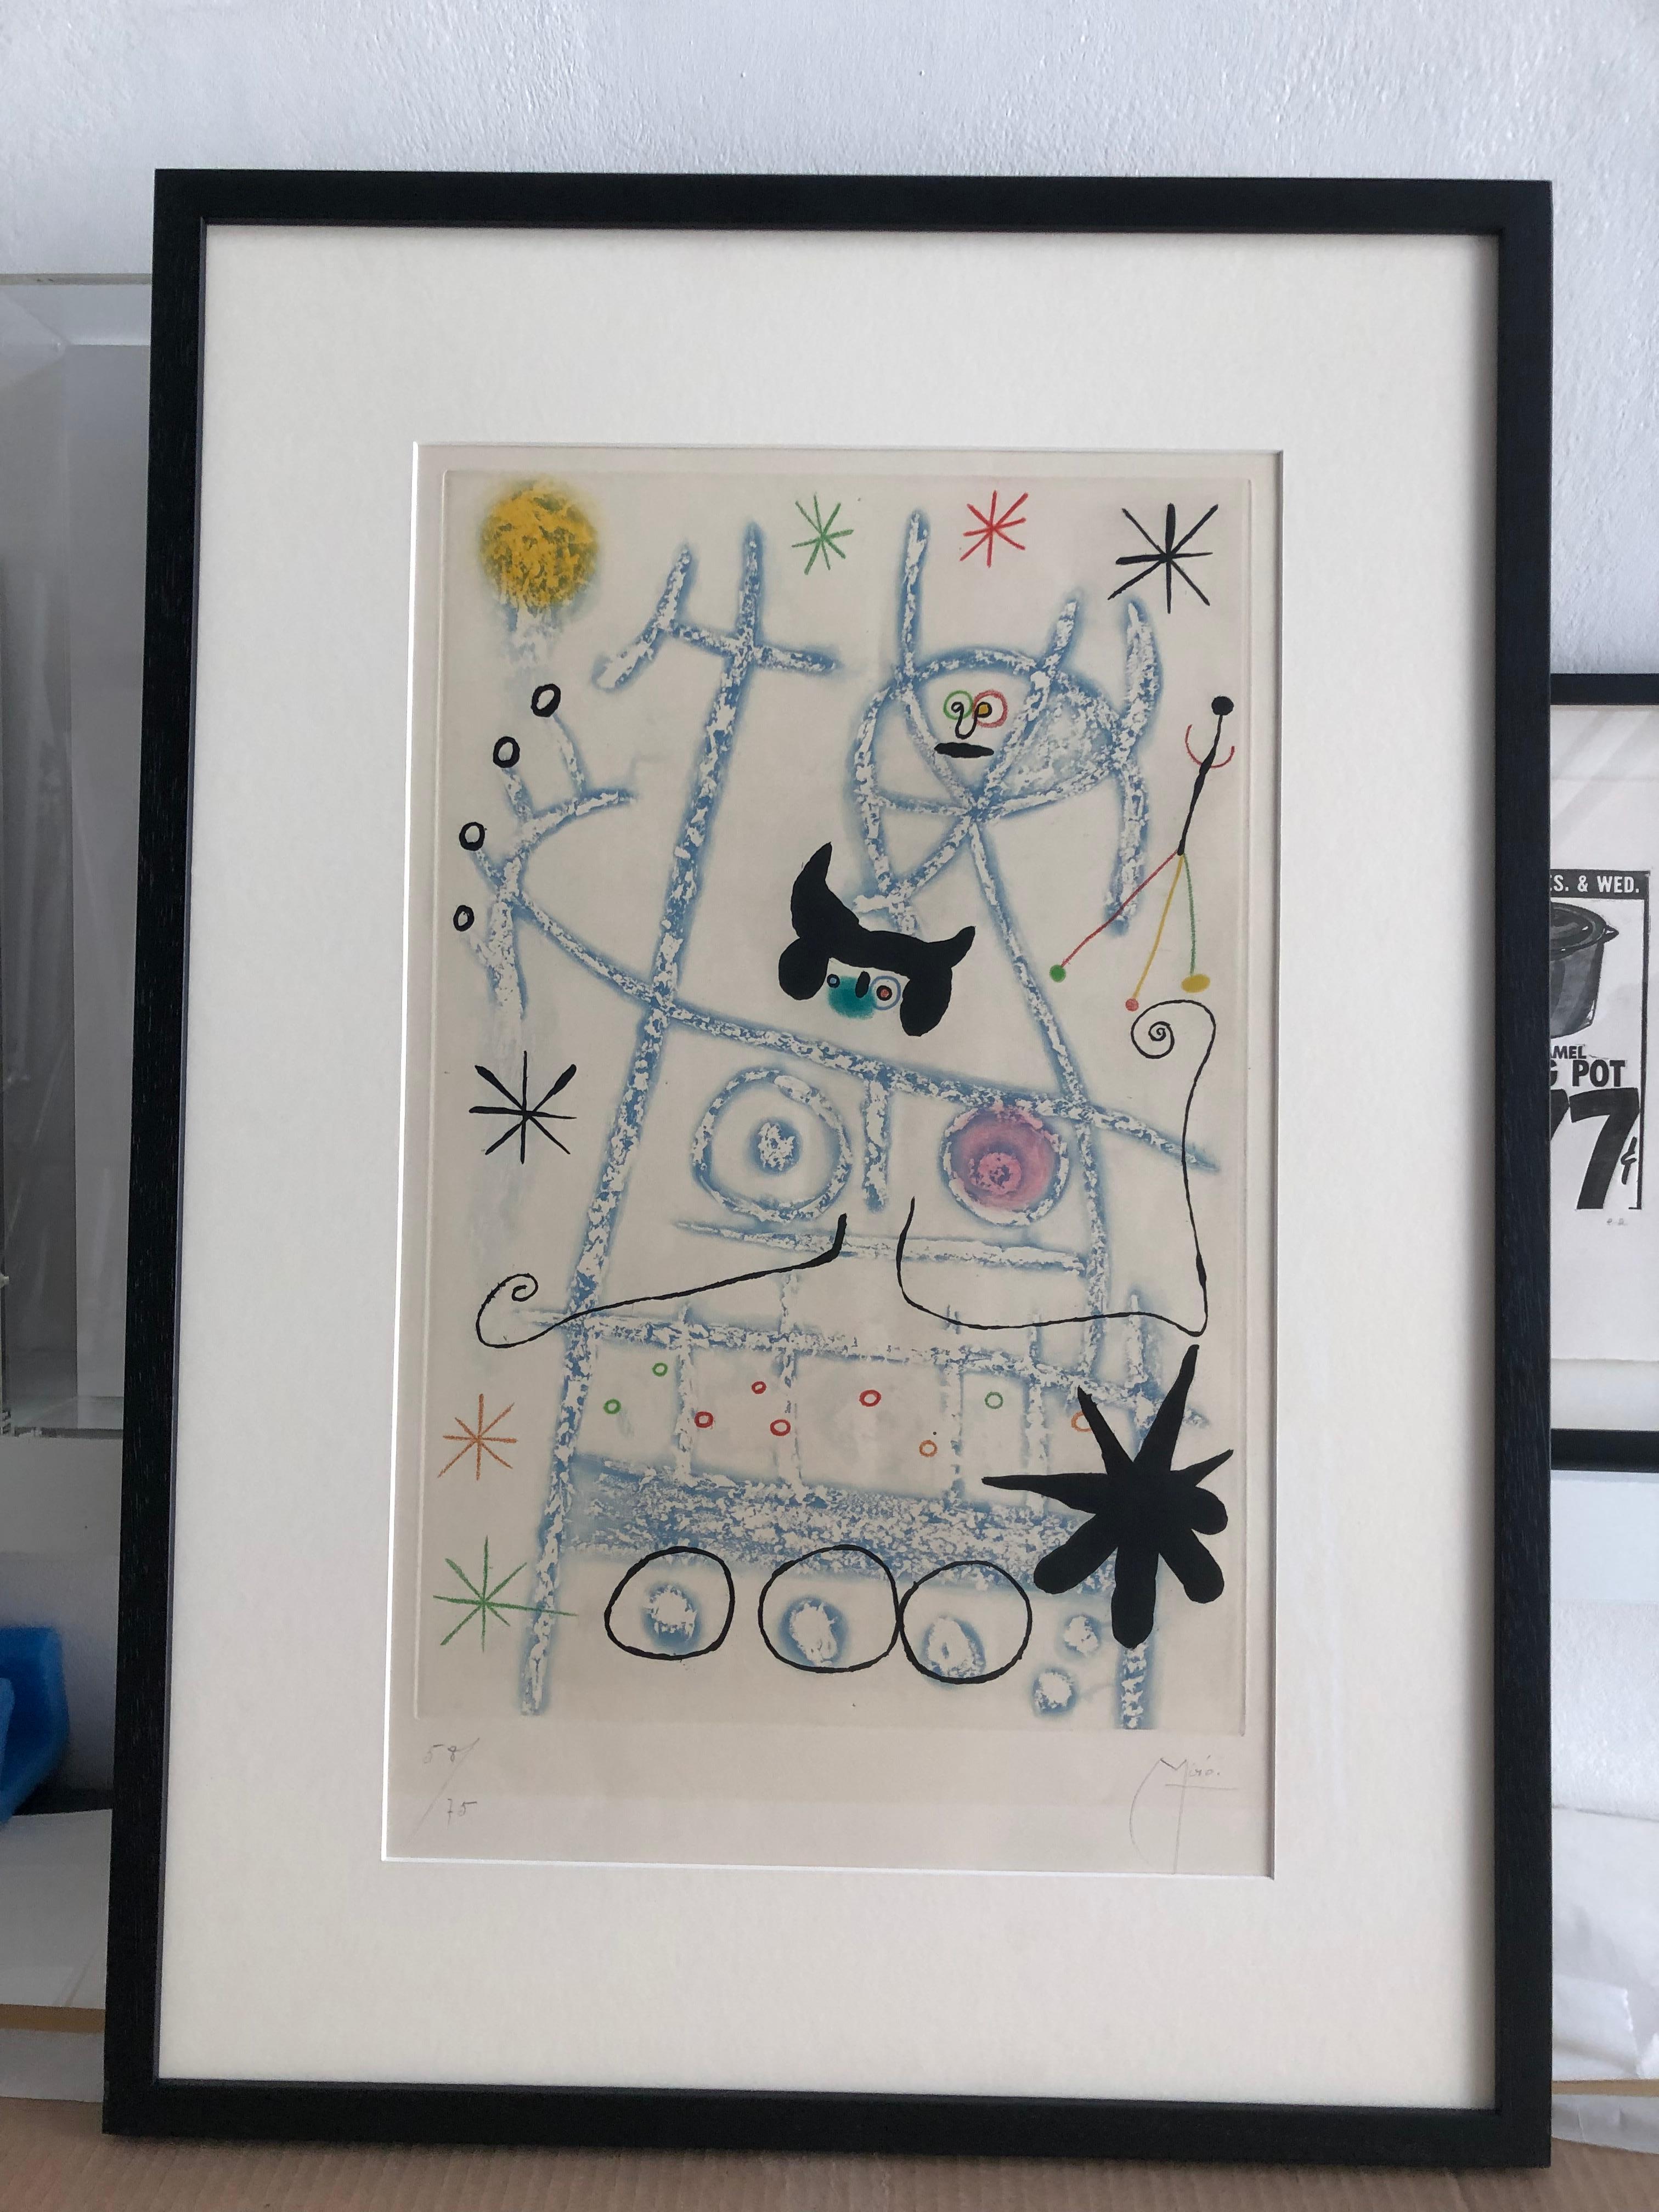 Les Forestiers (Bleu) - Surrealist Print by Joan Miró